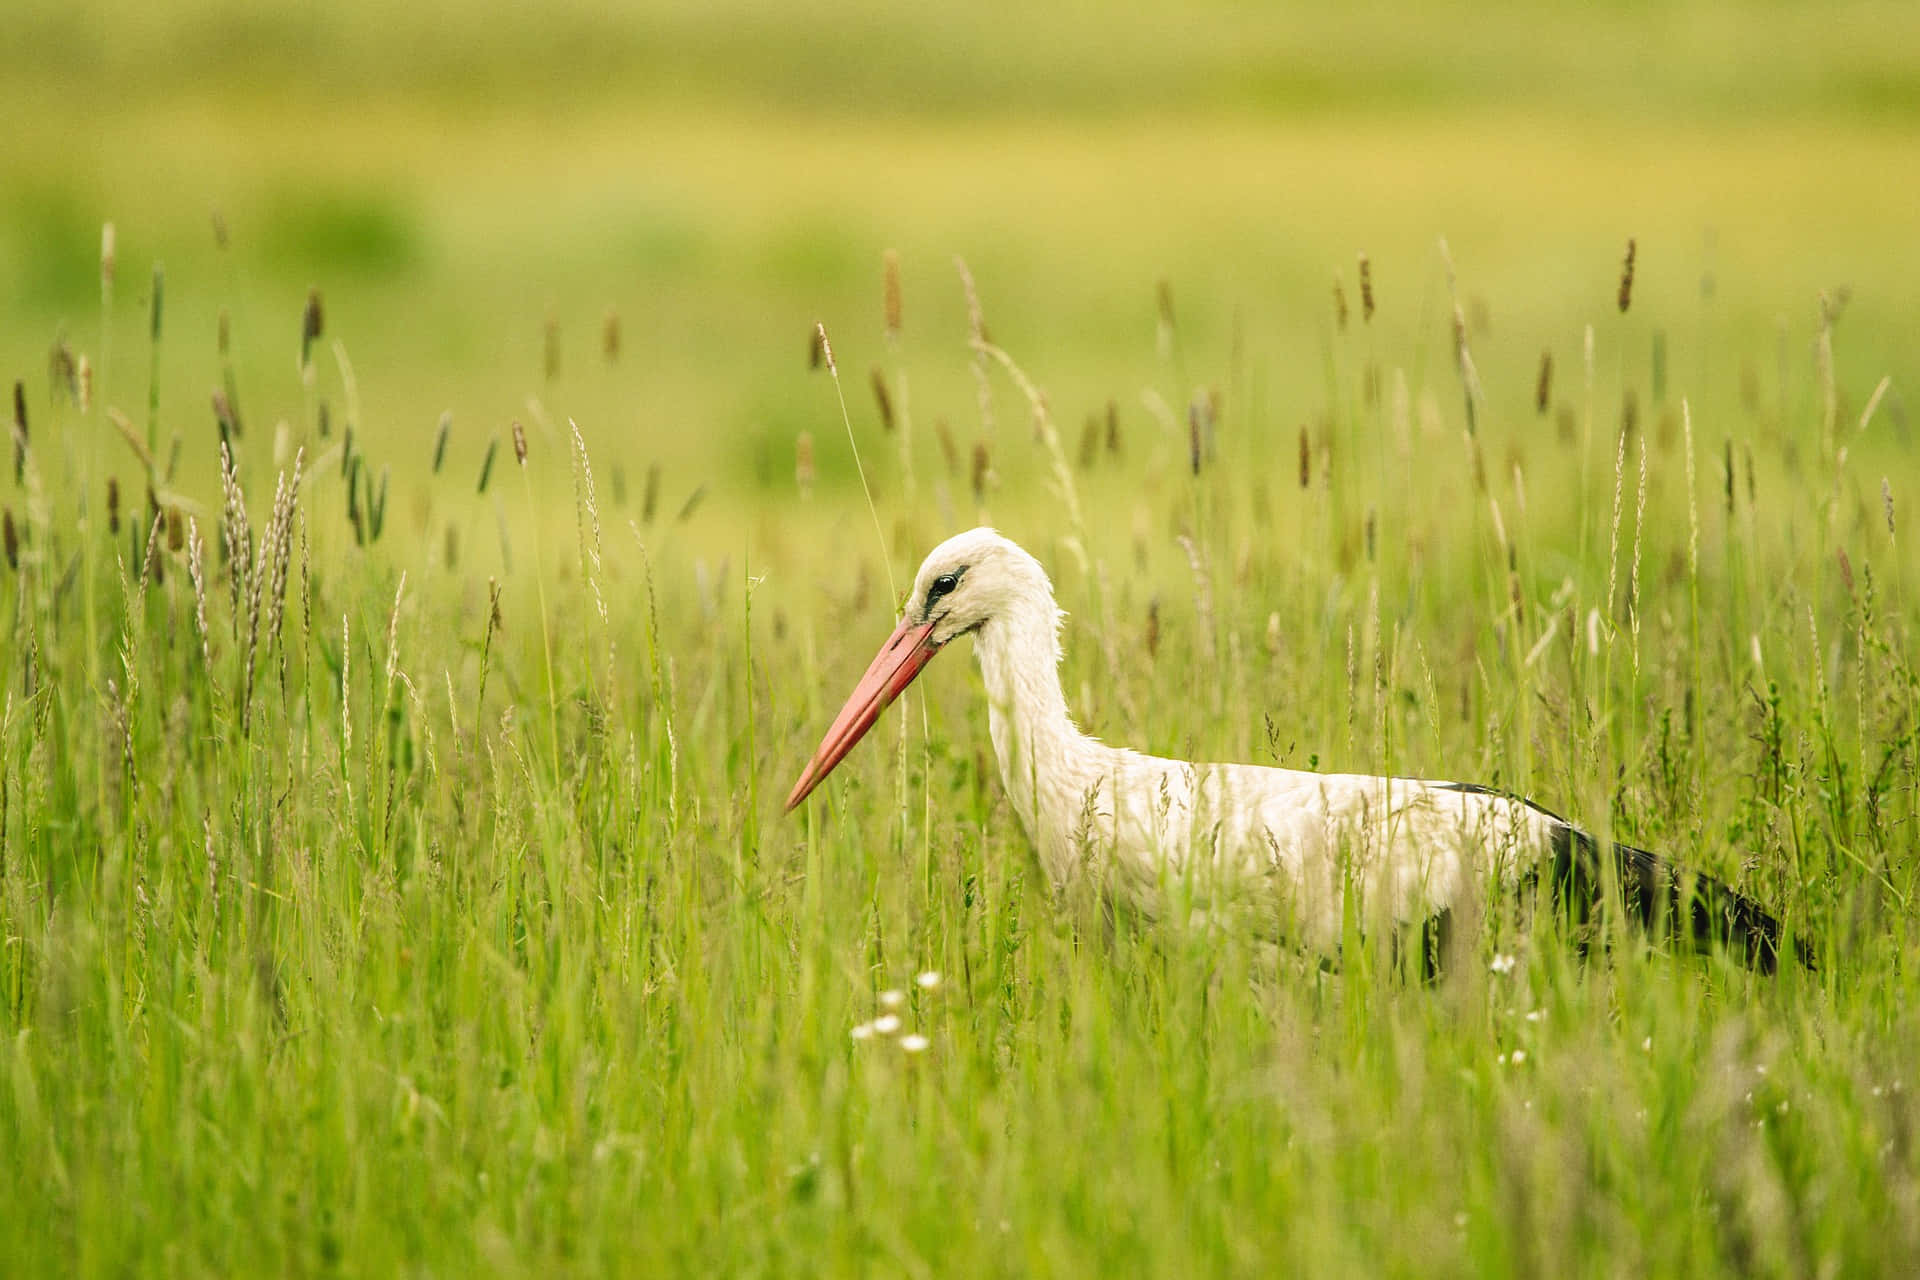 White Storkin Grassy Field.jpg Wallpaper